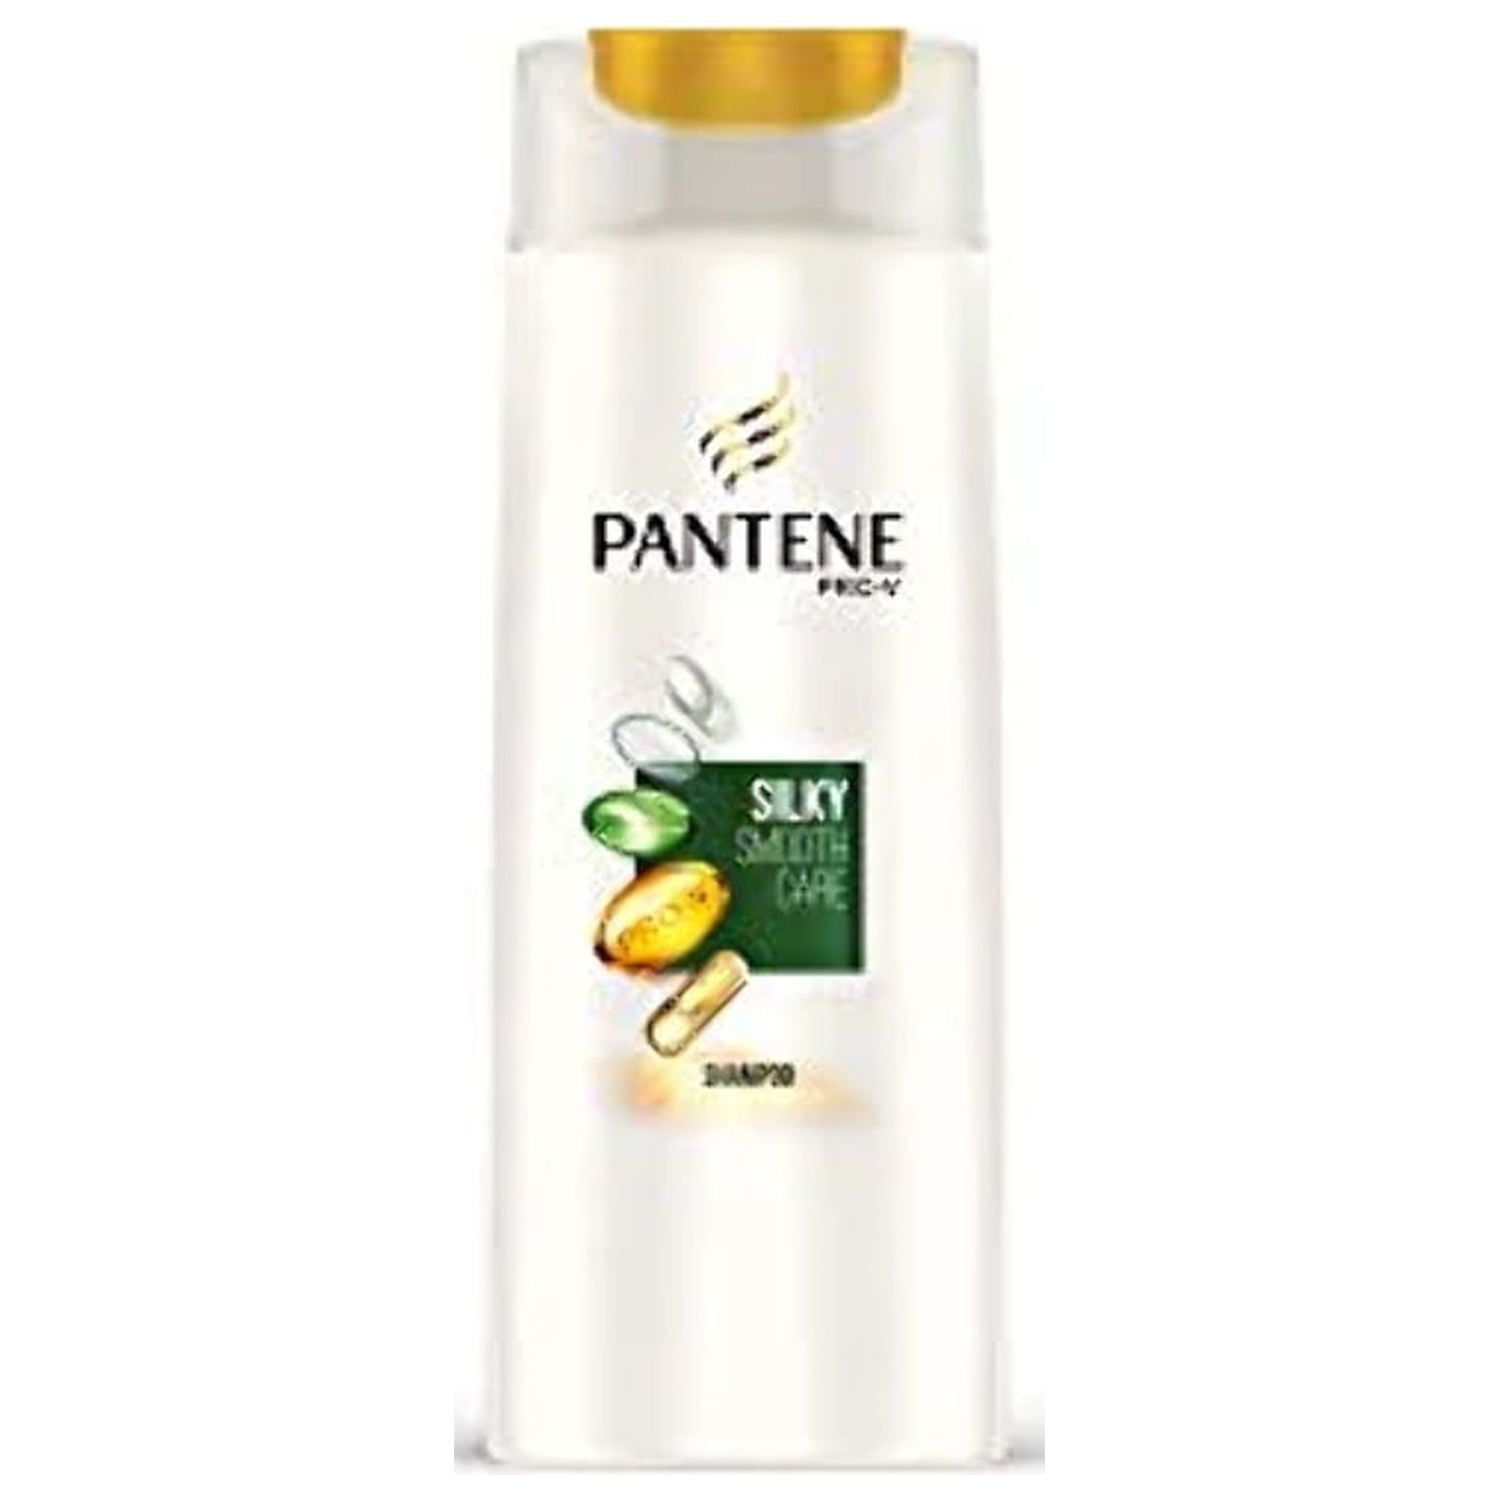 Pantene Advanced Hair Fall Solution Silky Smooth Care Shampoo, 75 ml 